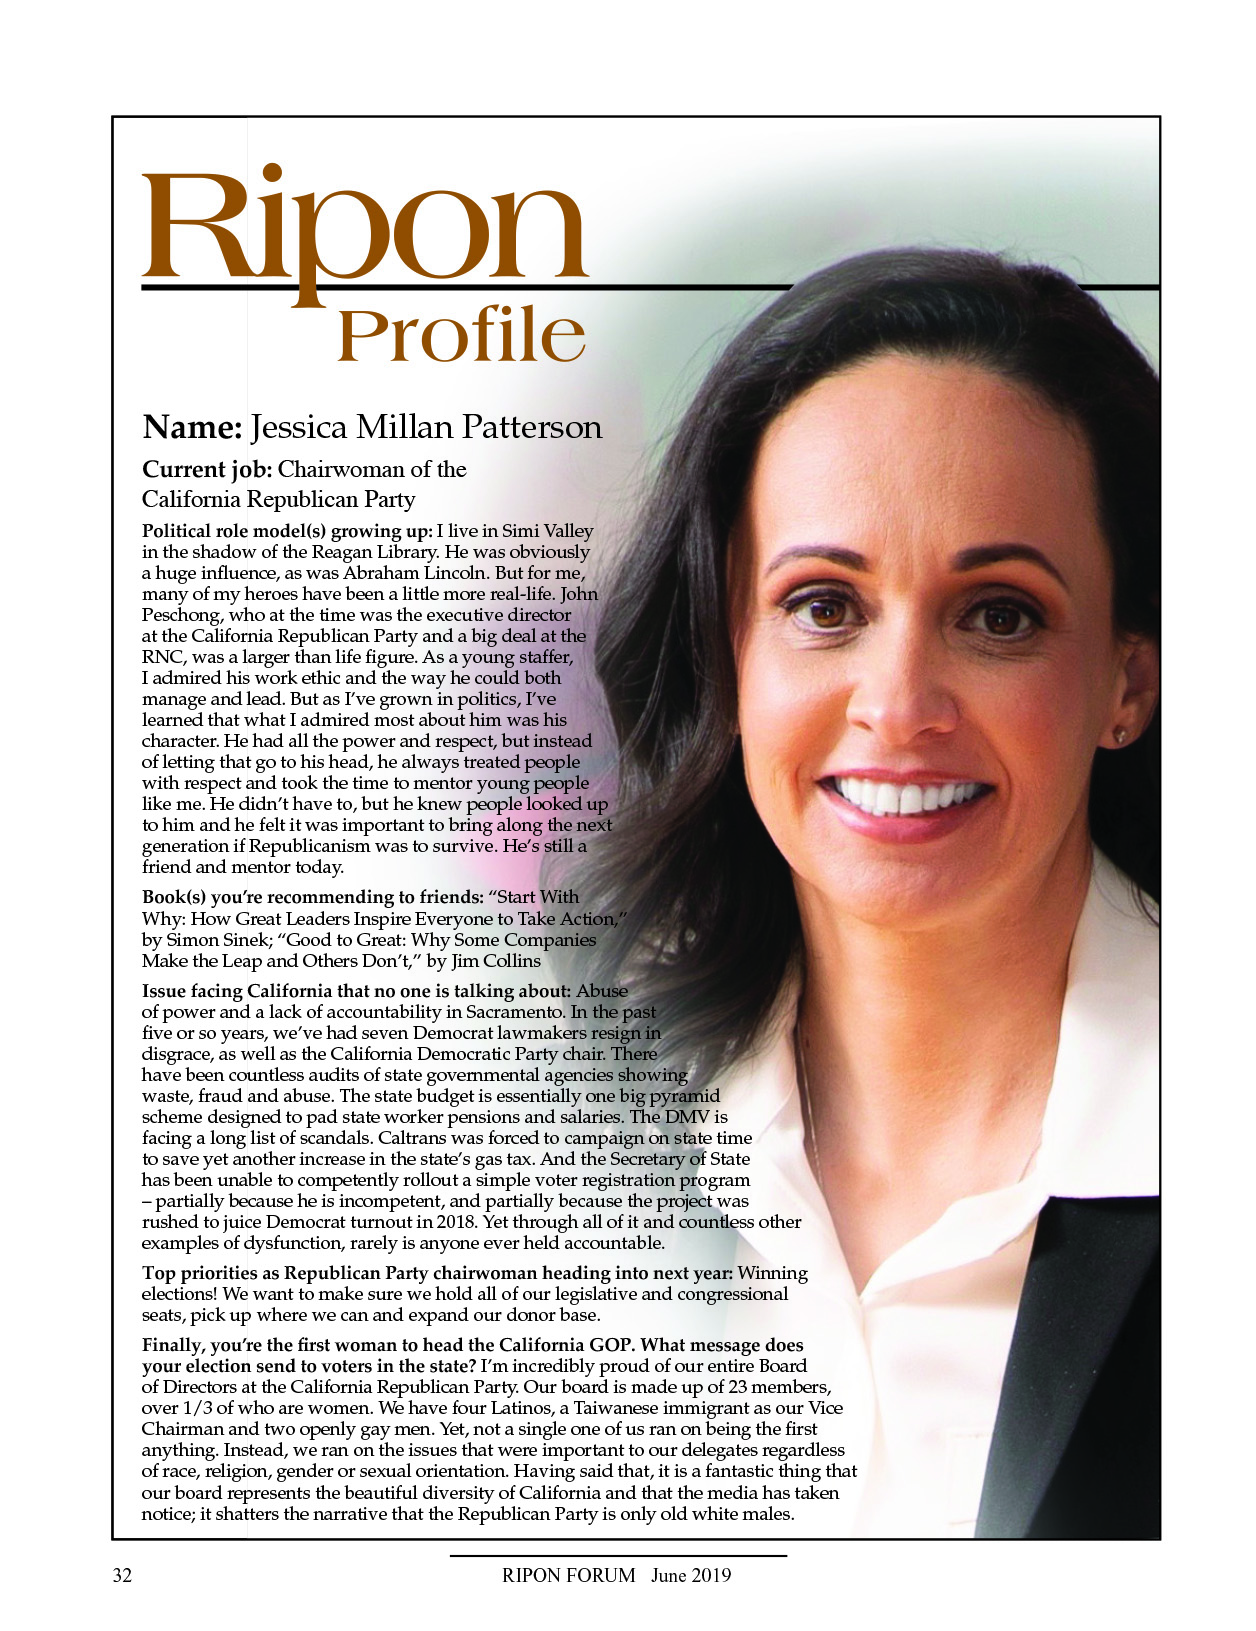 Ripon Profile of Jessica Millan Patterson